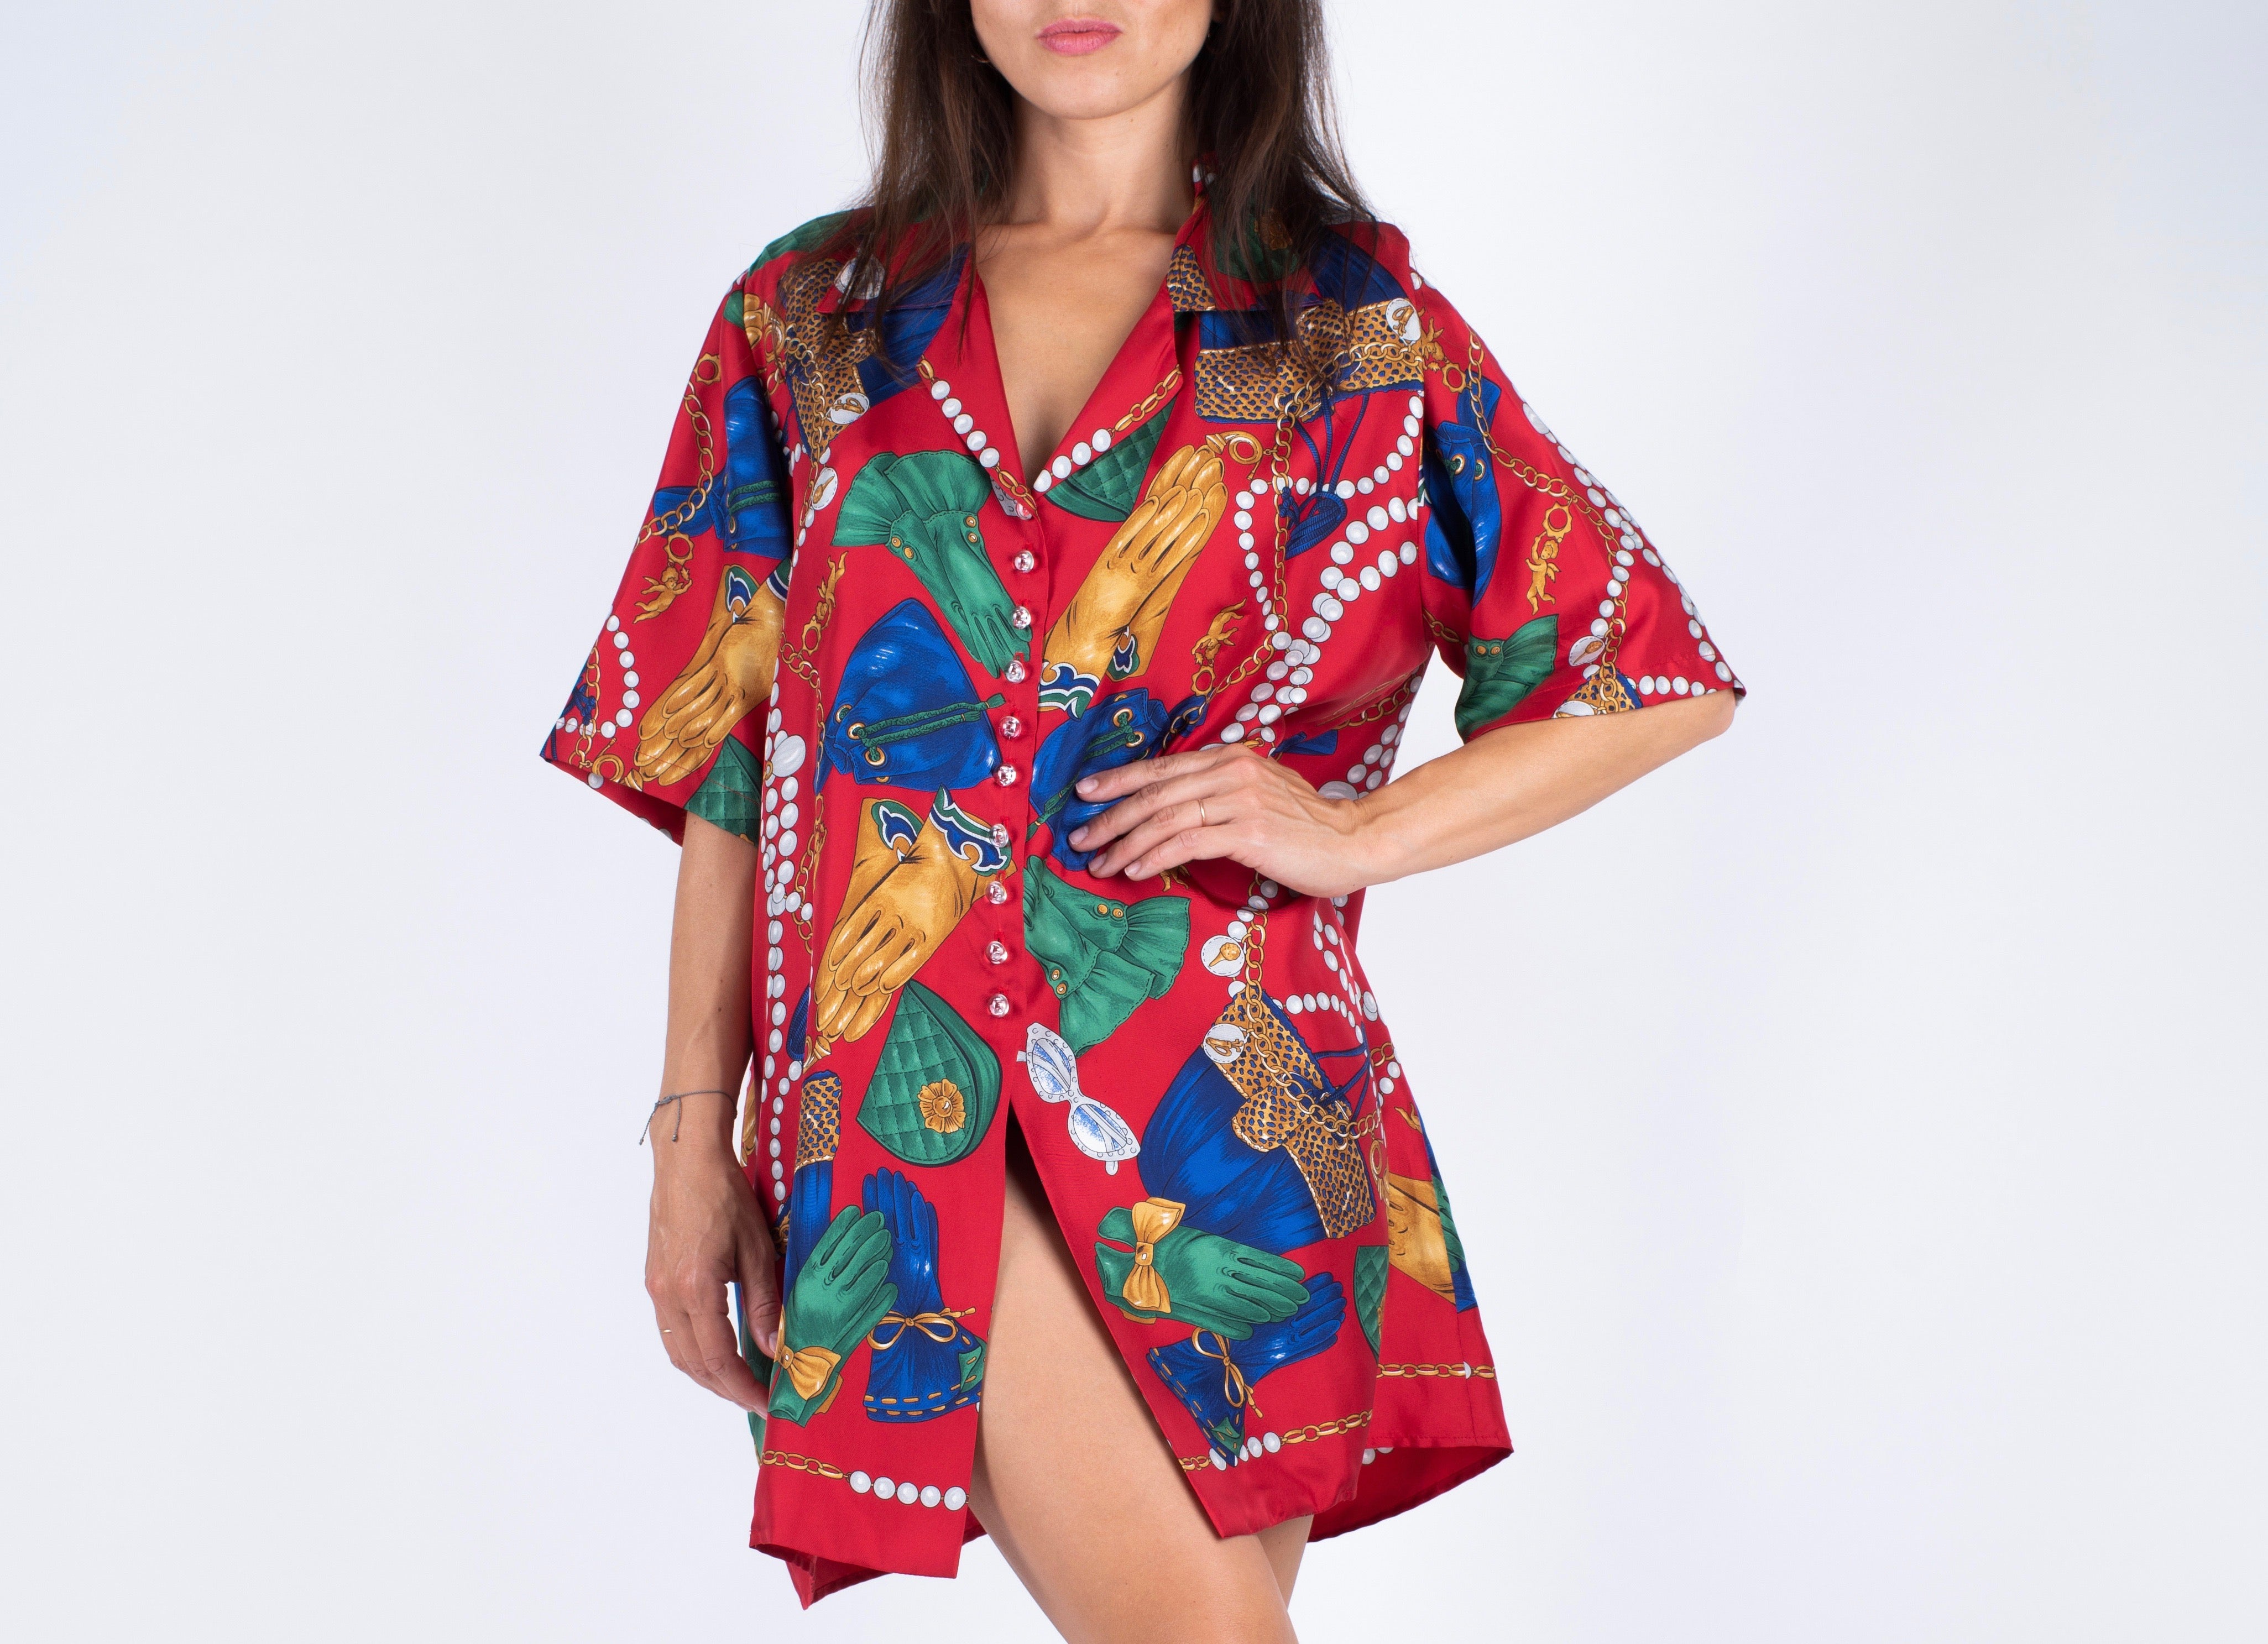 Stunning Novelty Fashion Items Print Silk Shirt, L